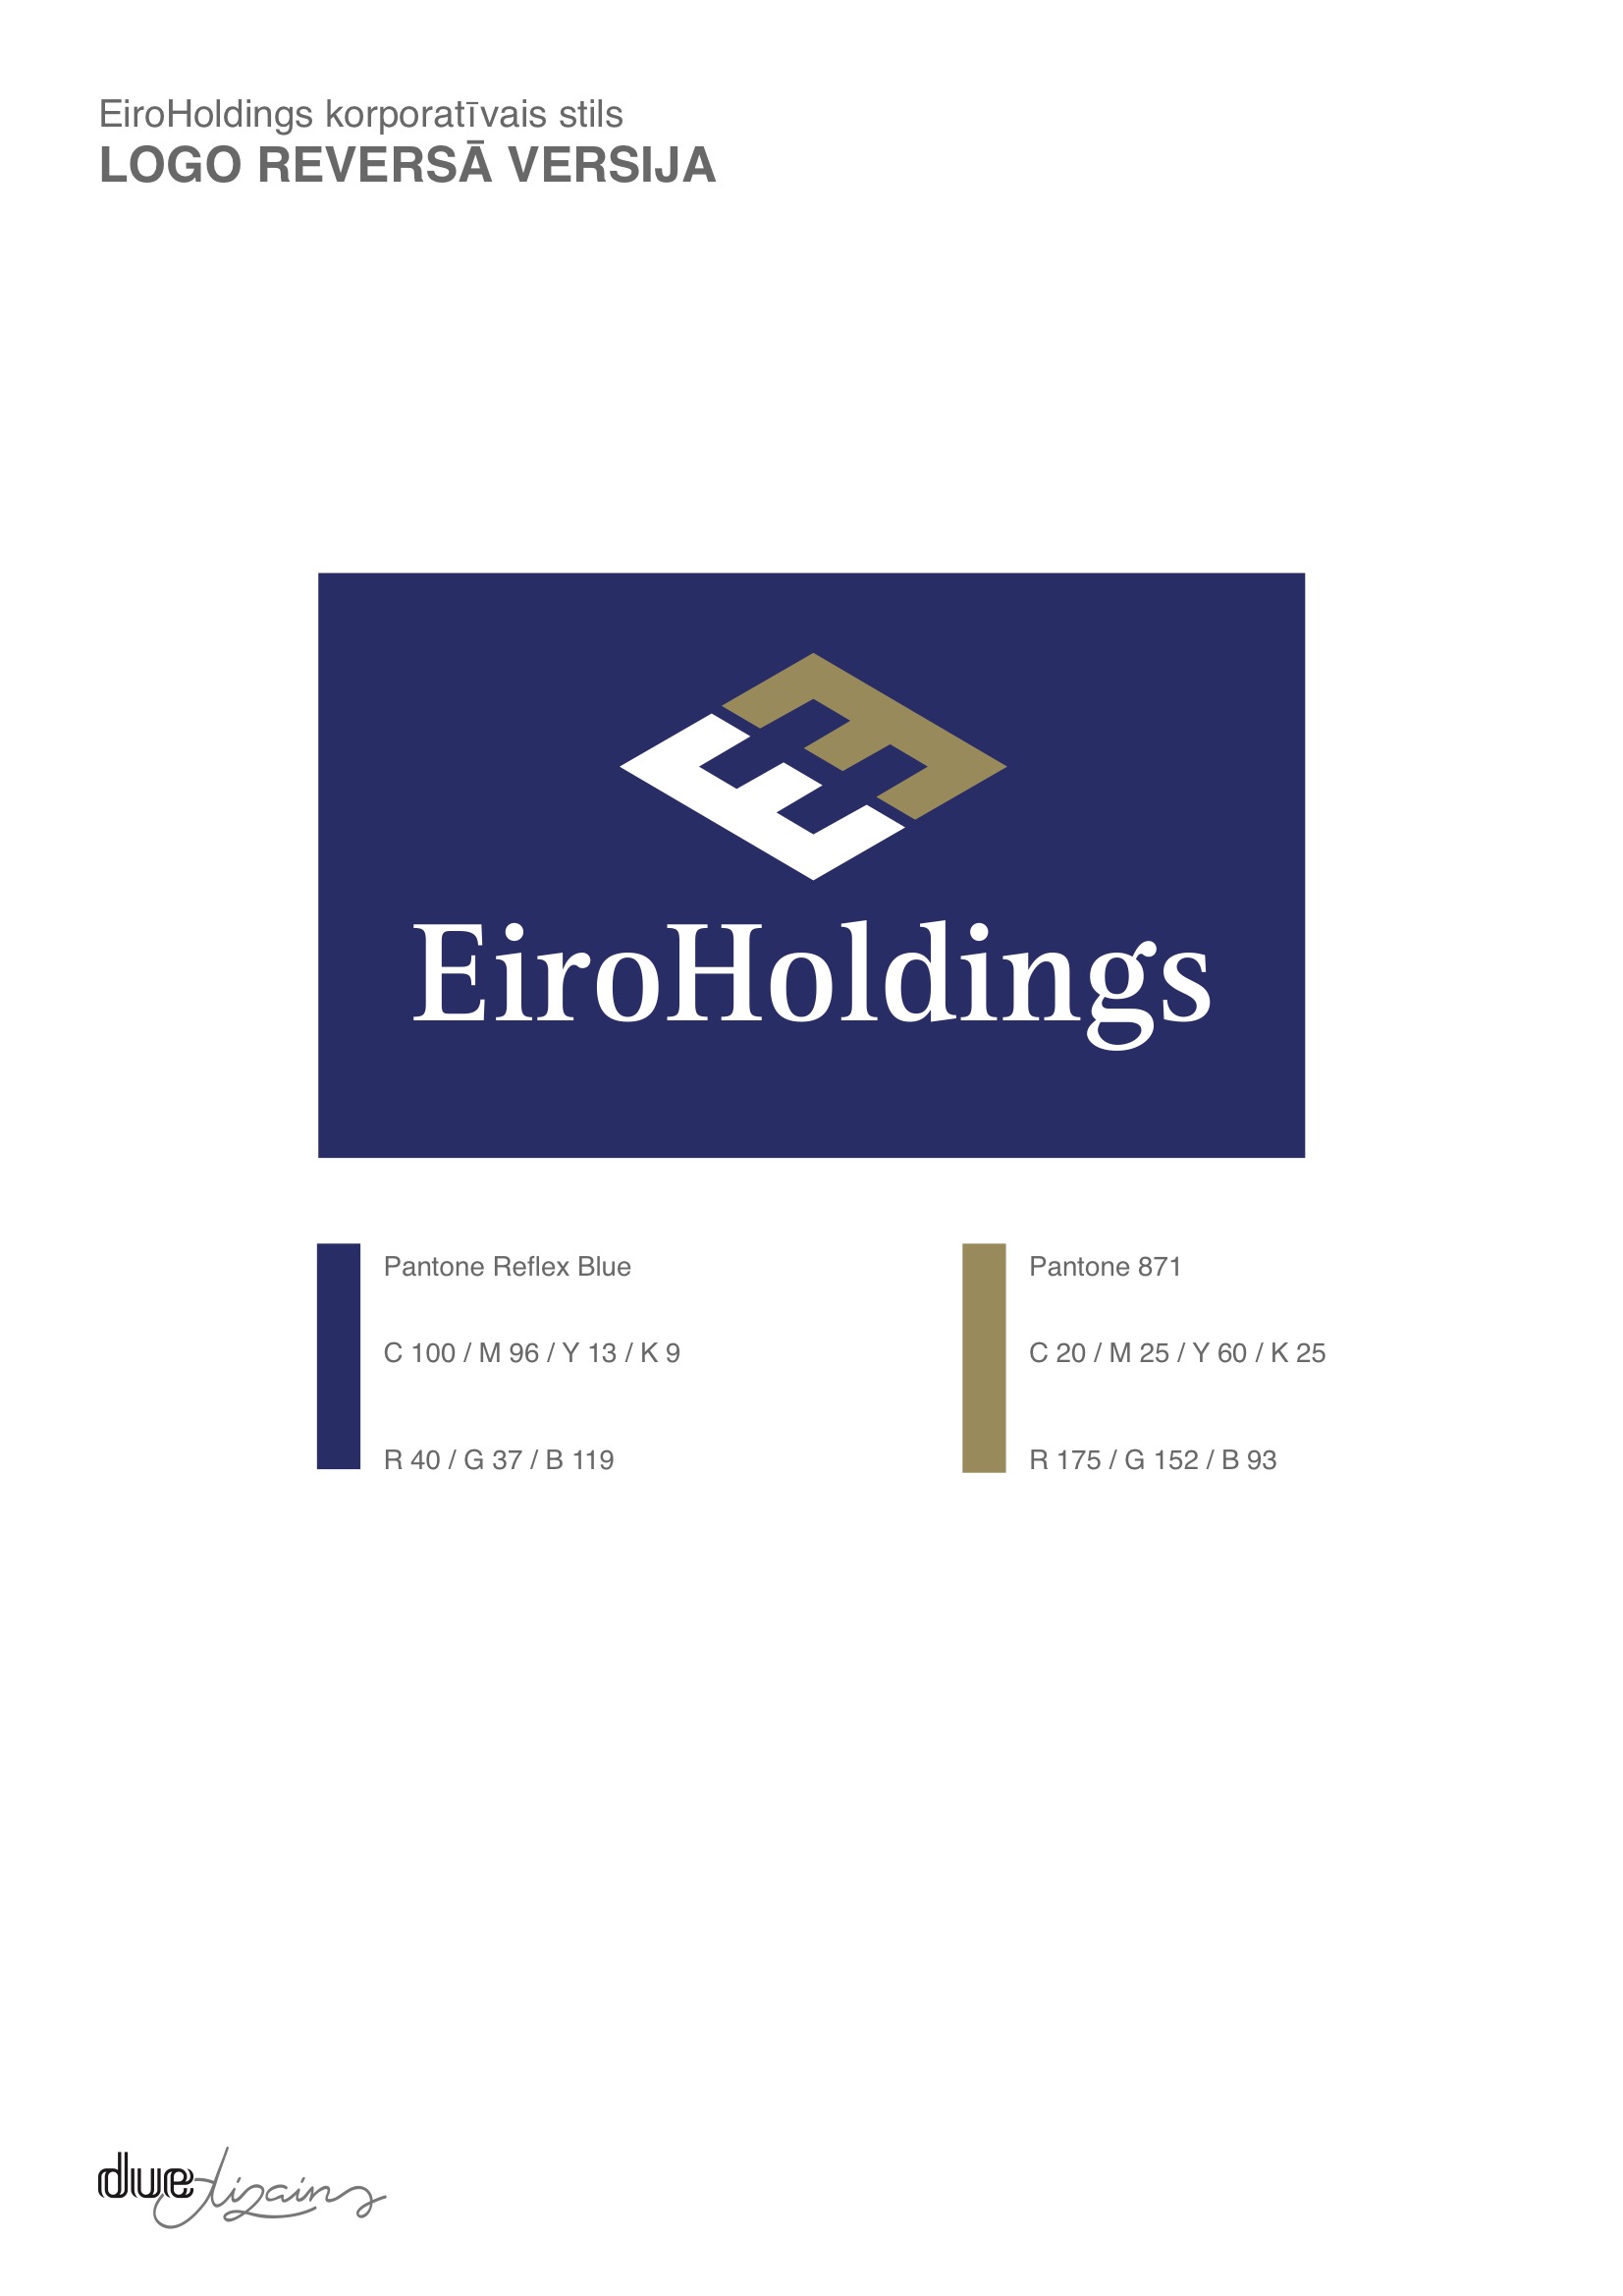 Eiroholdings_logo_guidelines 2